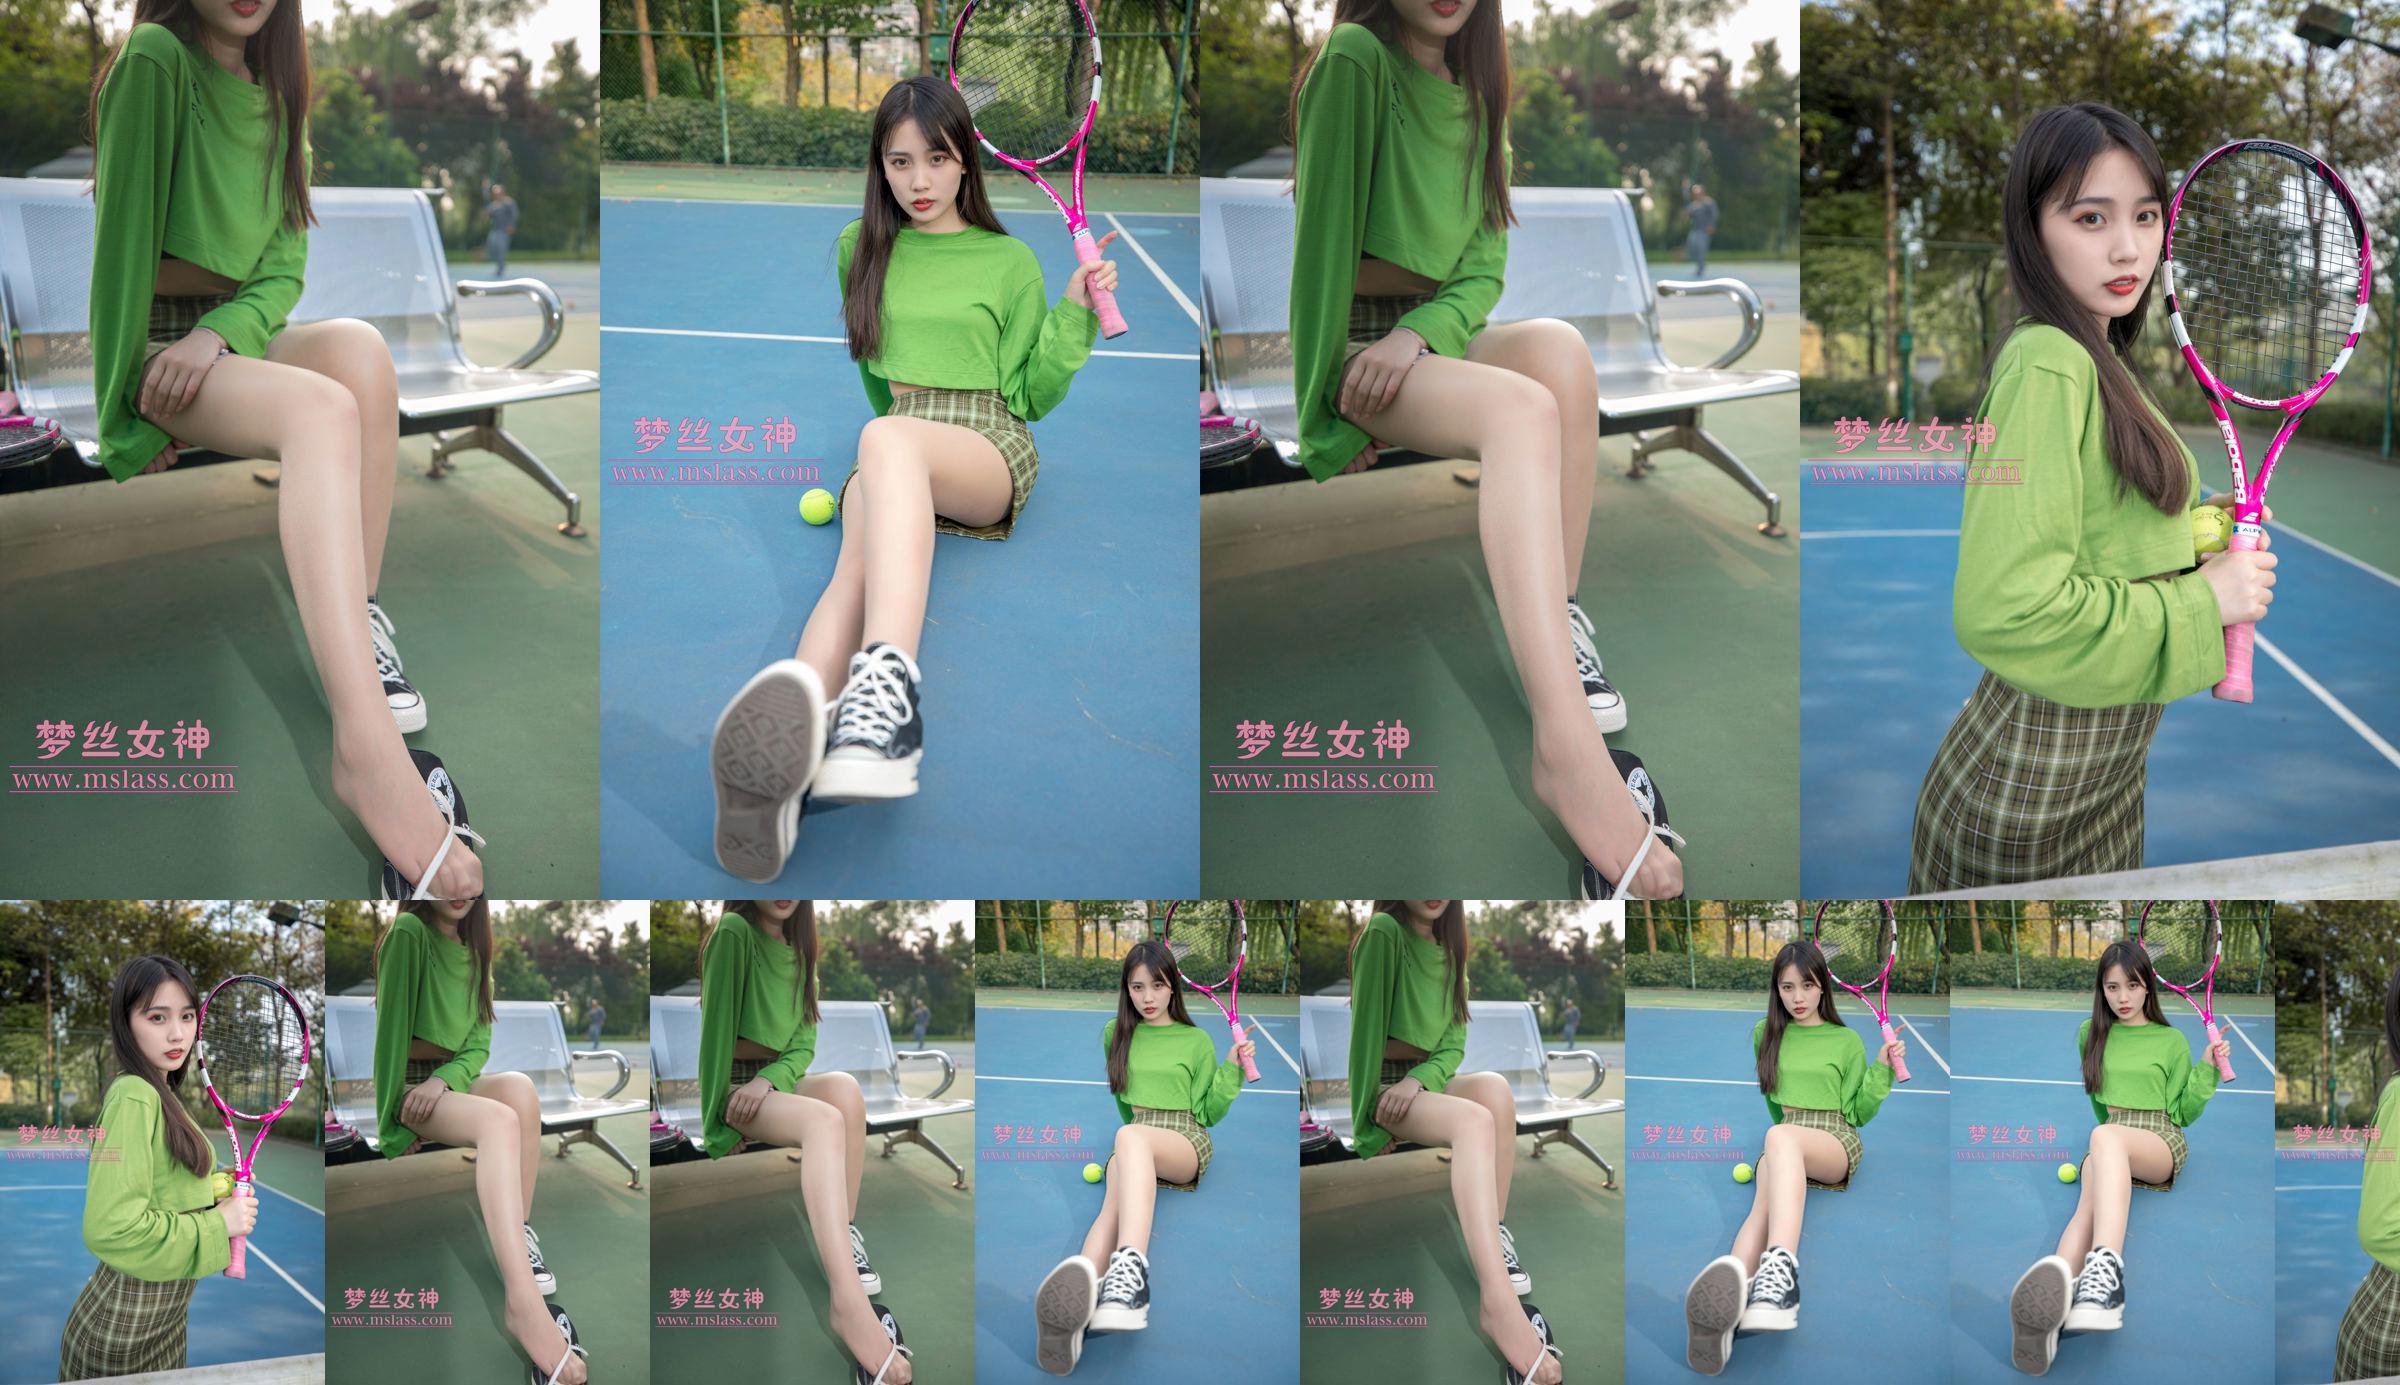 [Goddess of Dreams MSLASS] Xiang Xuan Tennis Girl No.4af2de Page 1